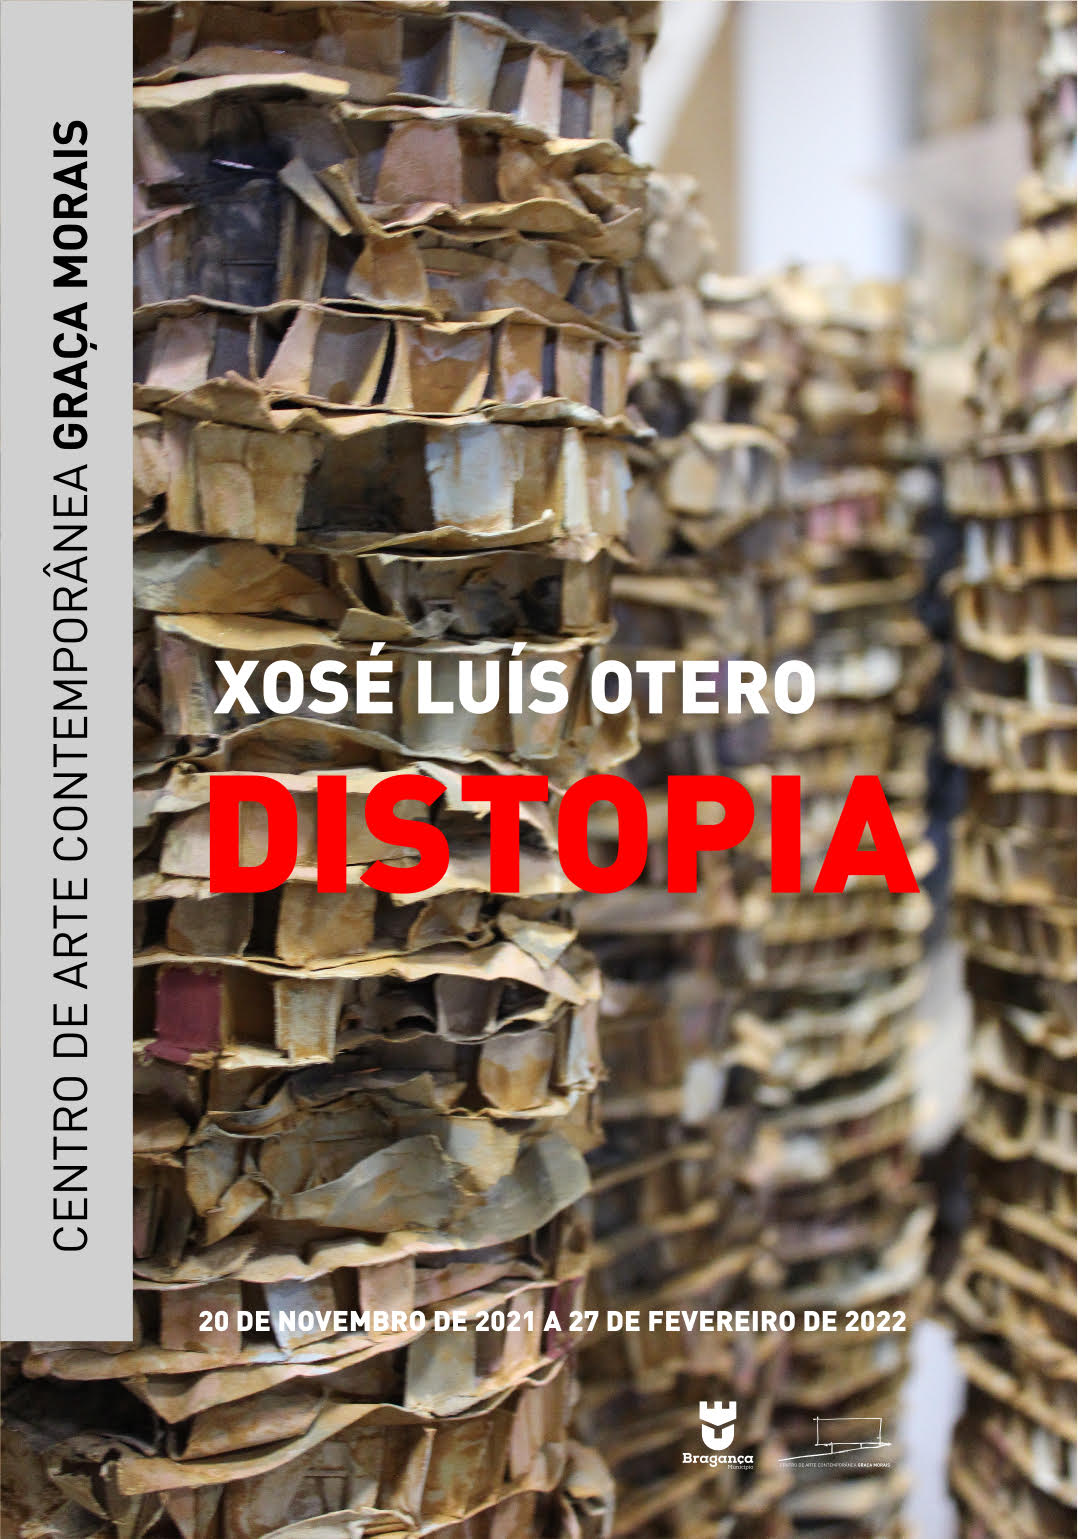 Exposição “Distopia”, de Xosé Luís Otero